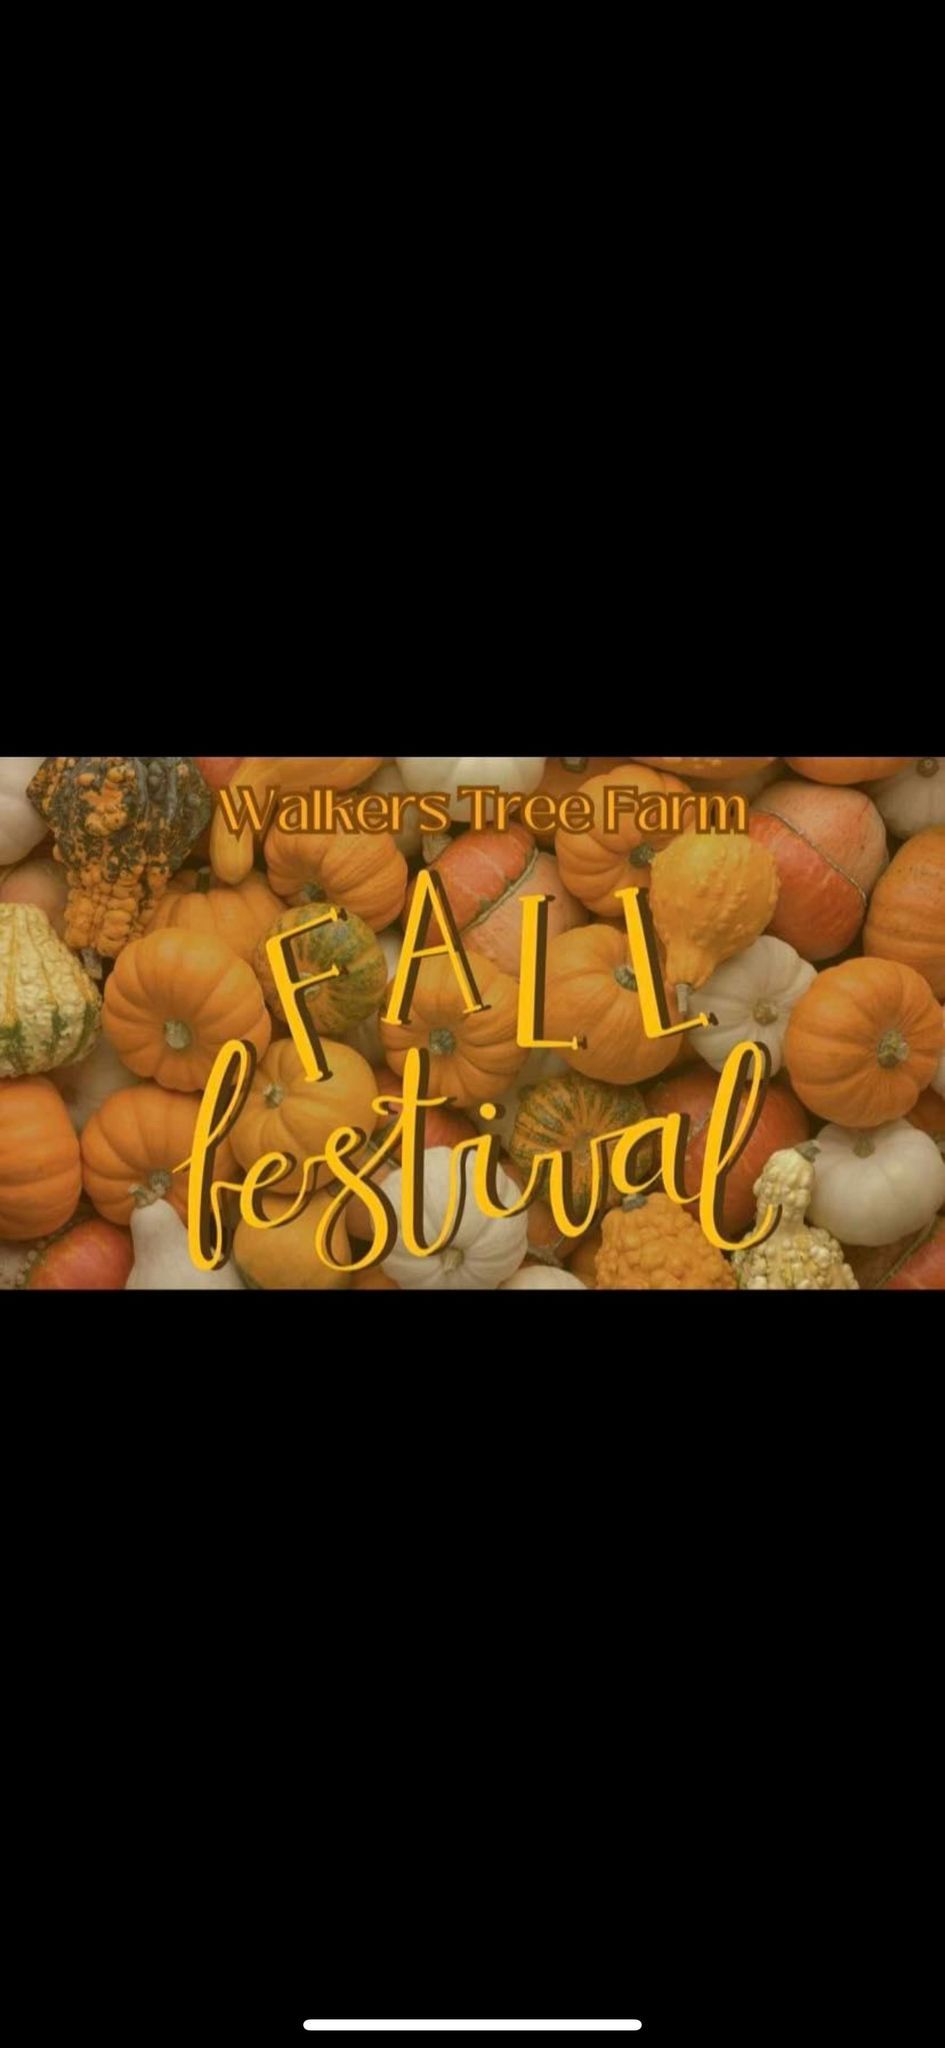 Walker's Tree Farm 2nd annual Fall Festival